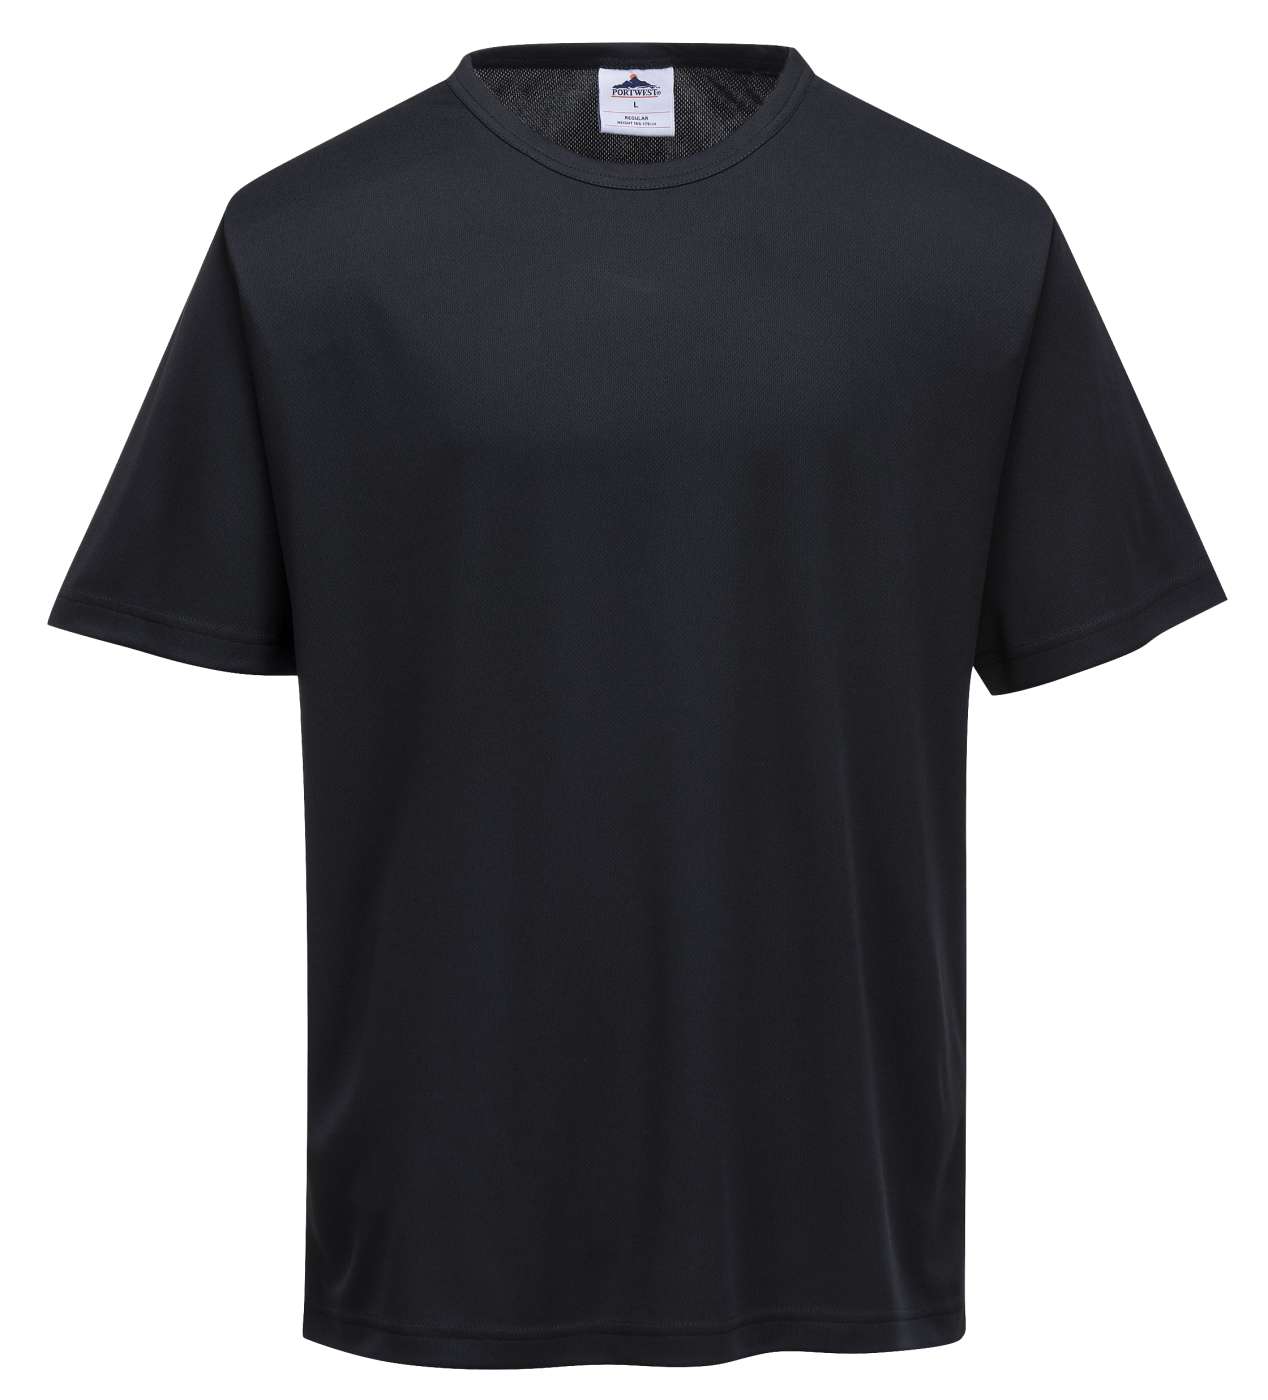 Portwest Men's Breathable Polyester Work T-Shirt